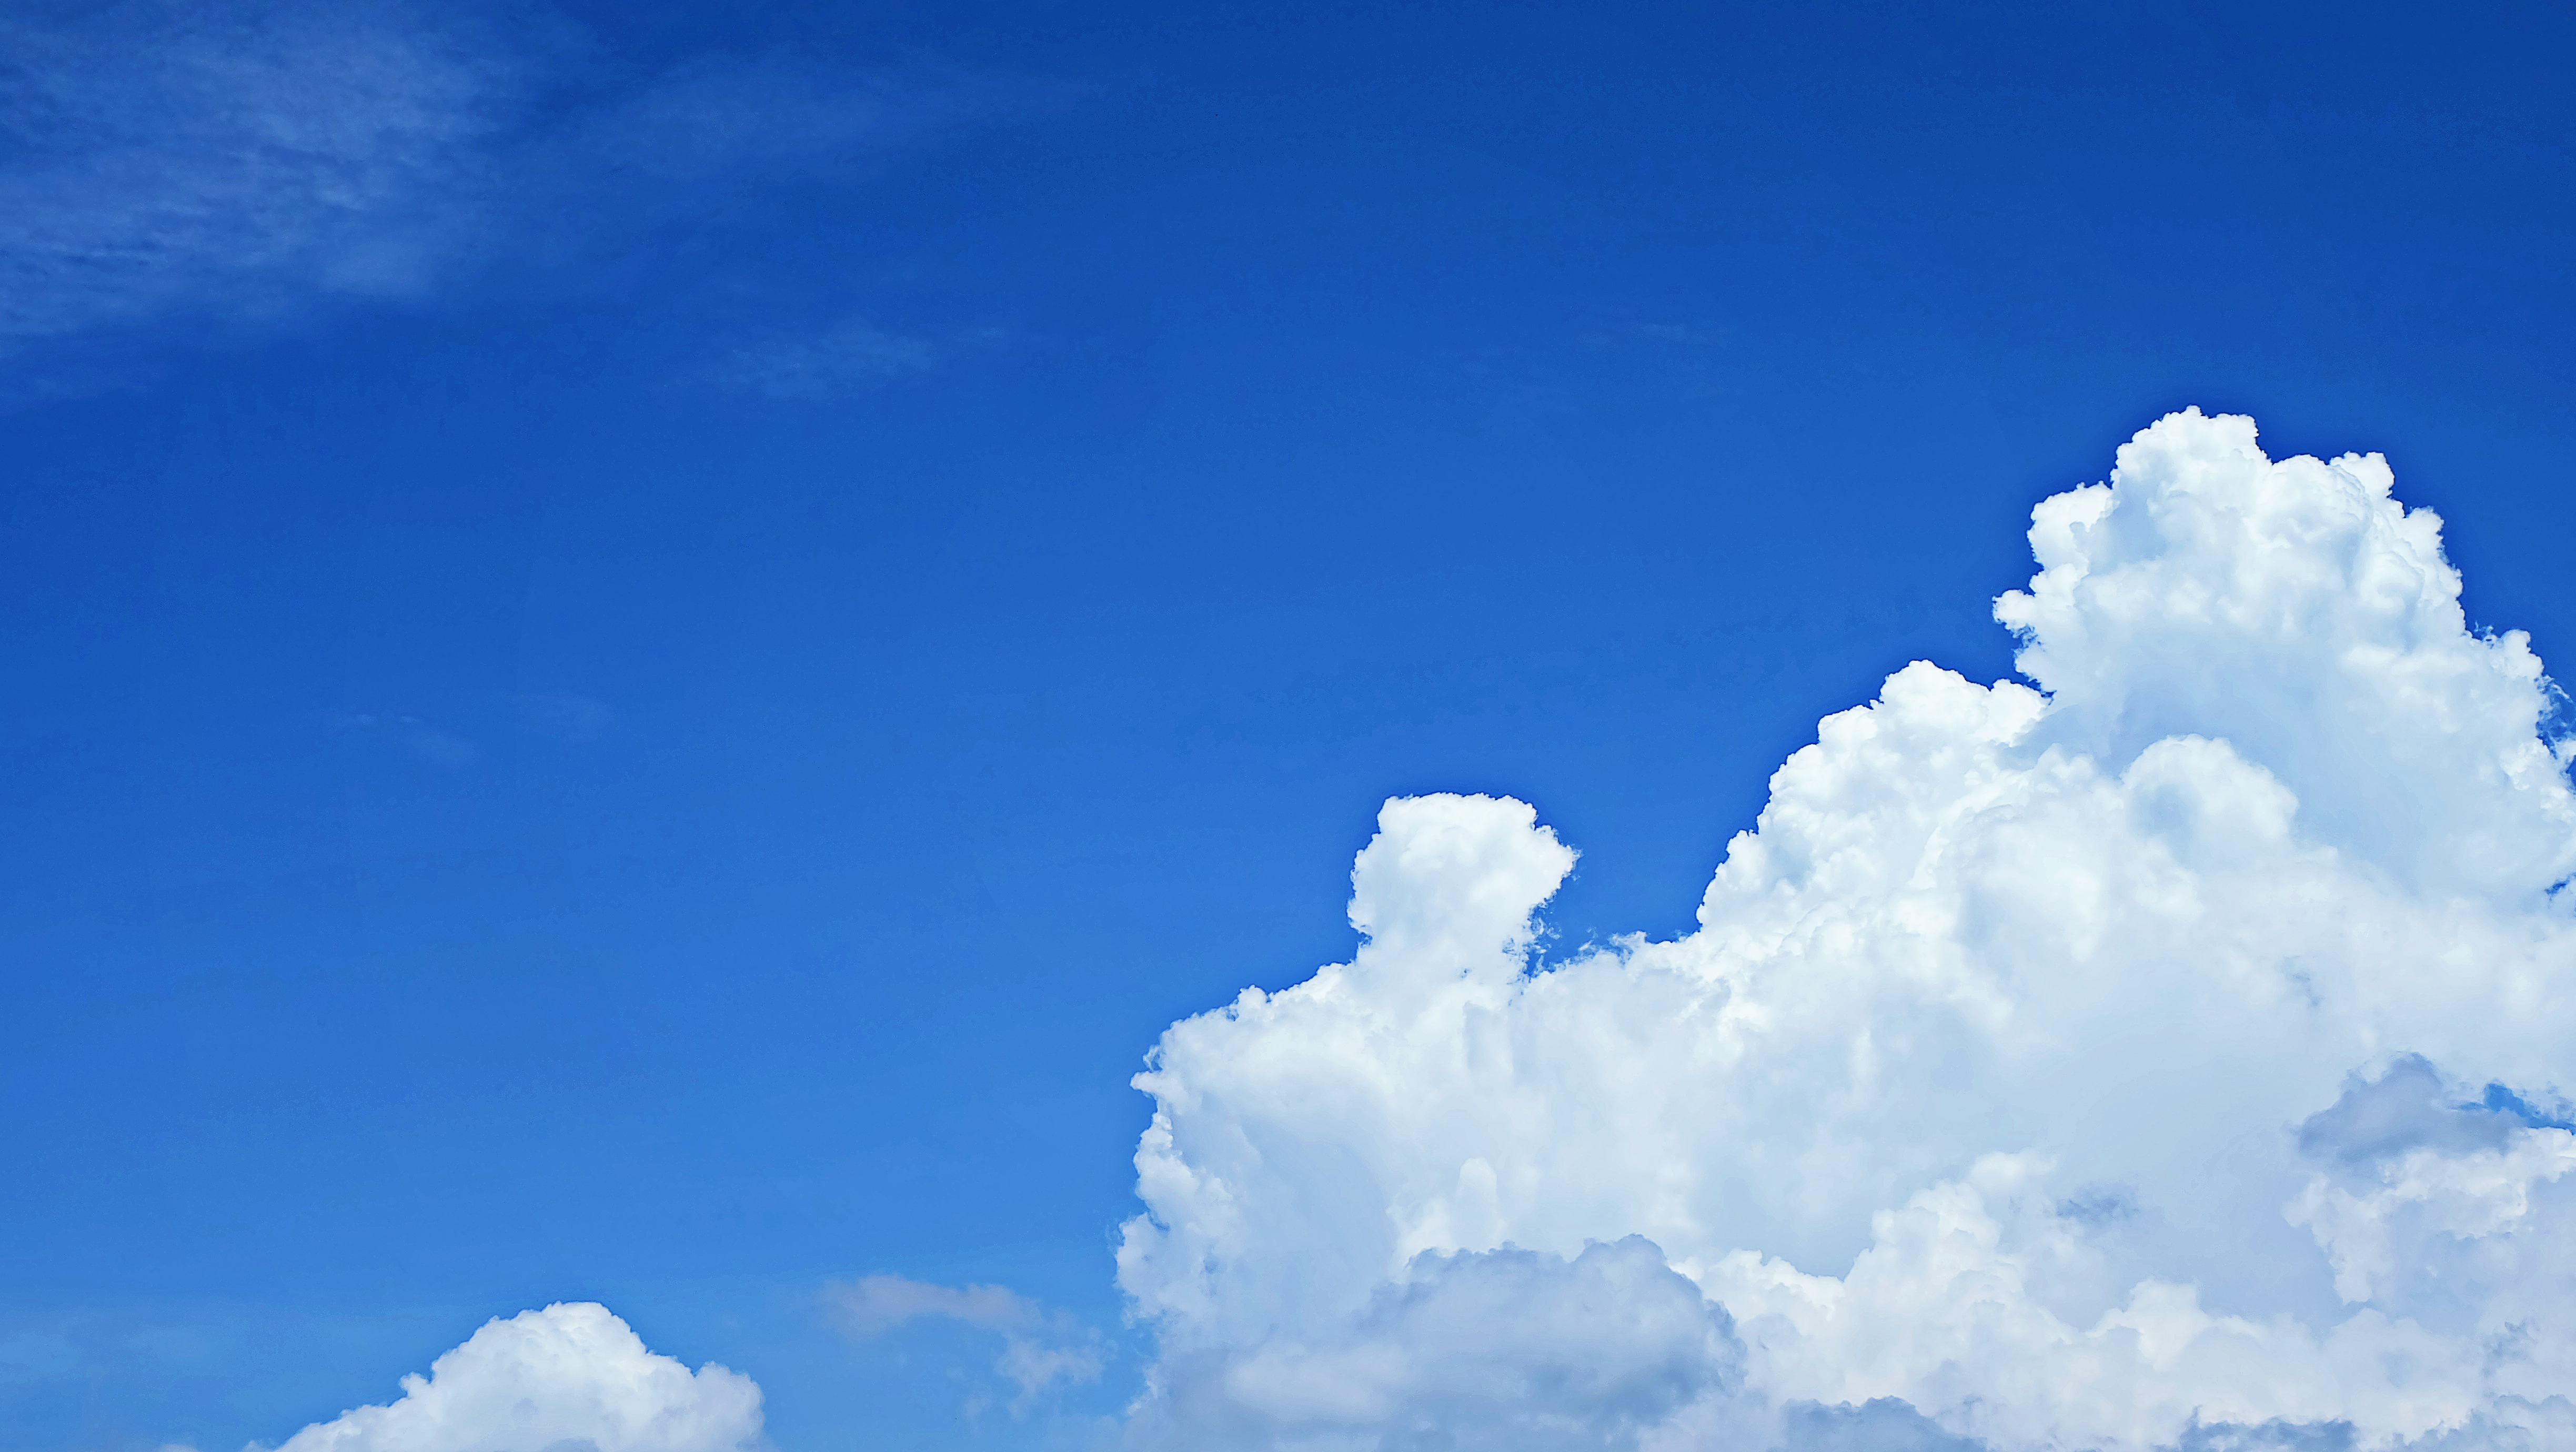 Free photo: Nimbus Clouds and Blue Sky - Atmosphere, Blue, Blue sky